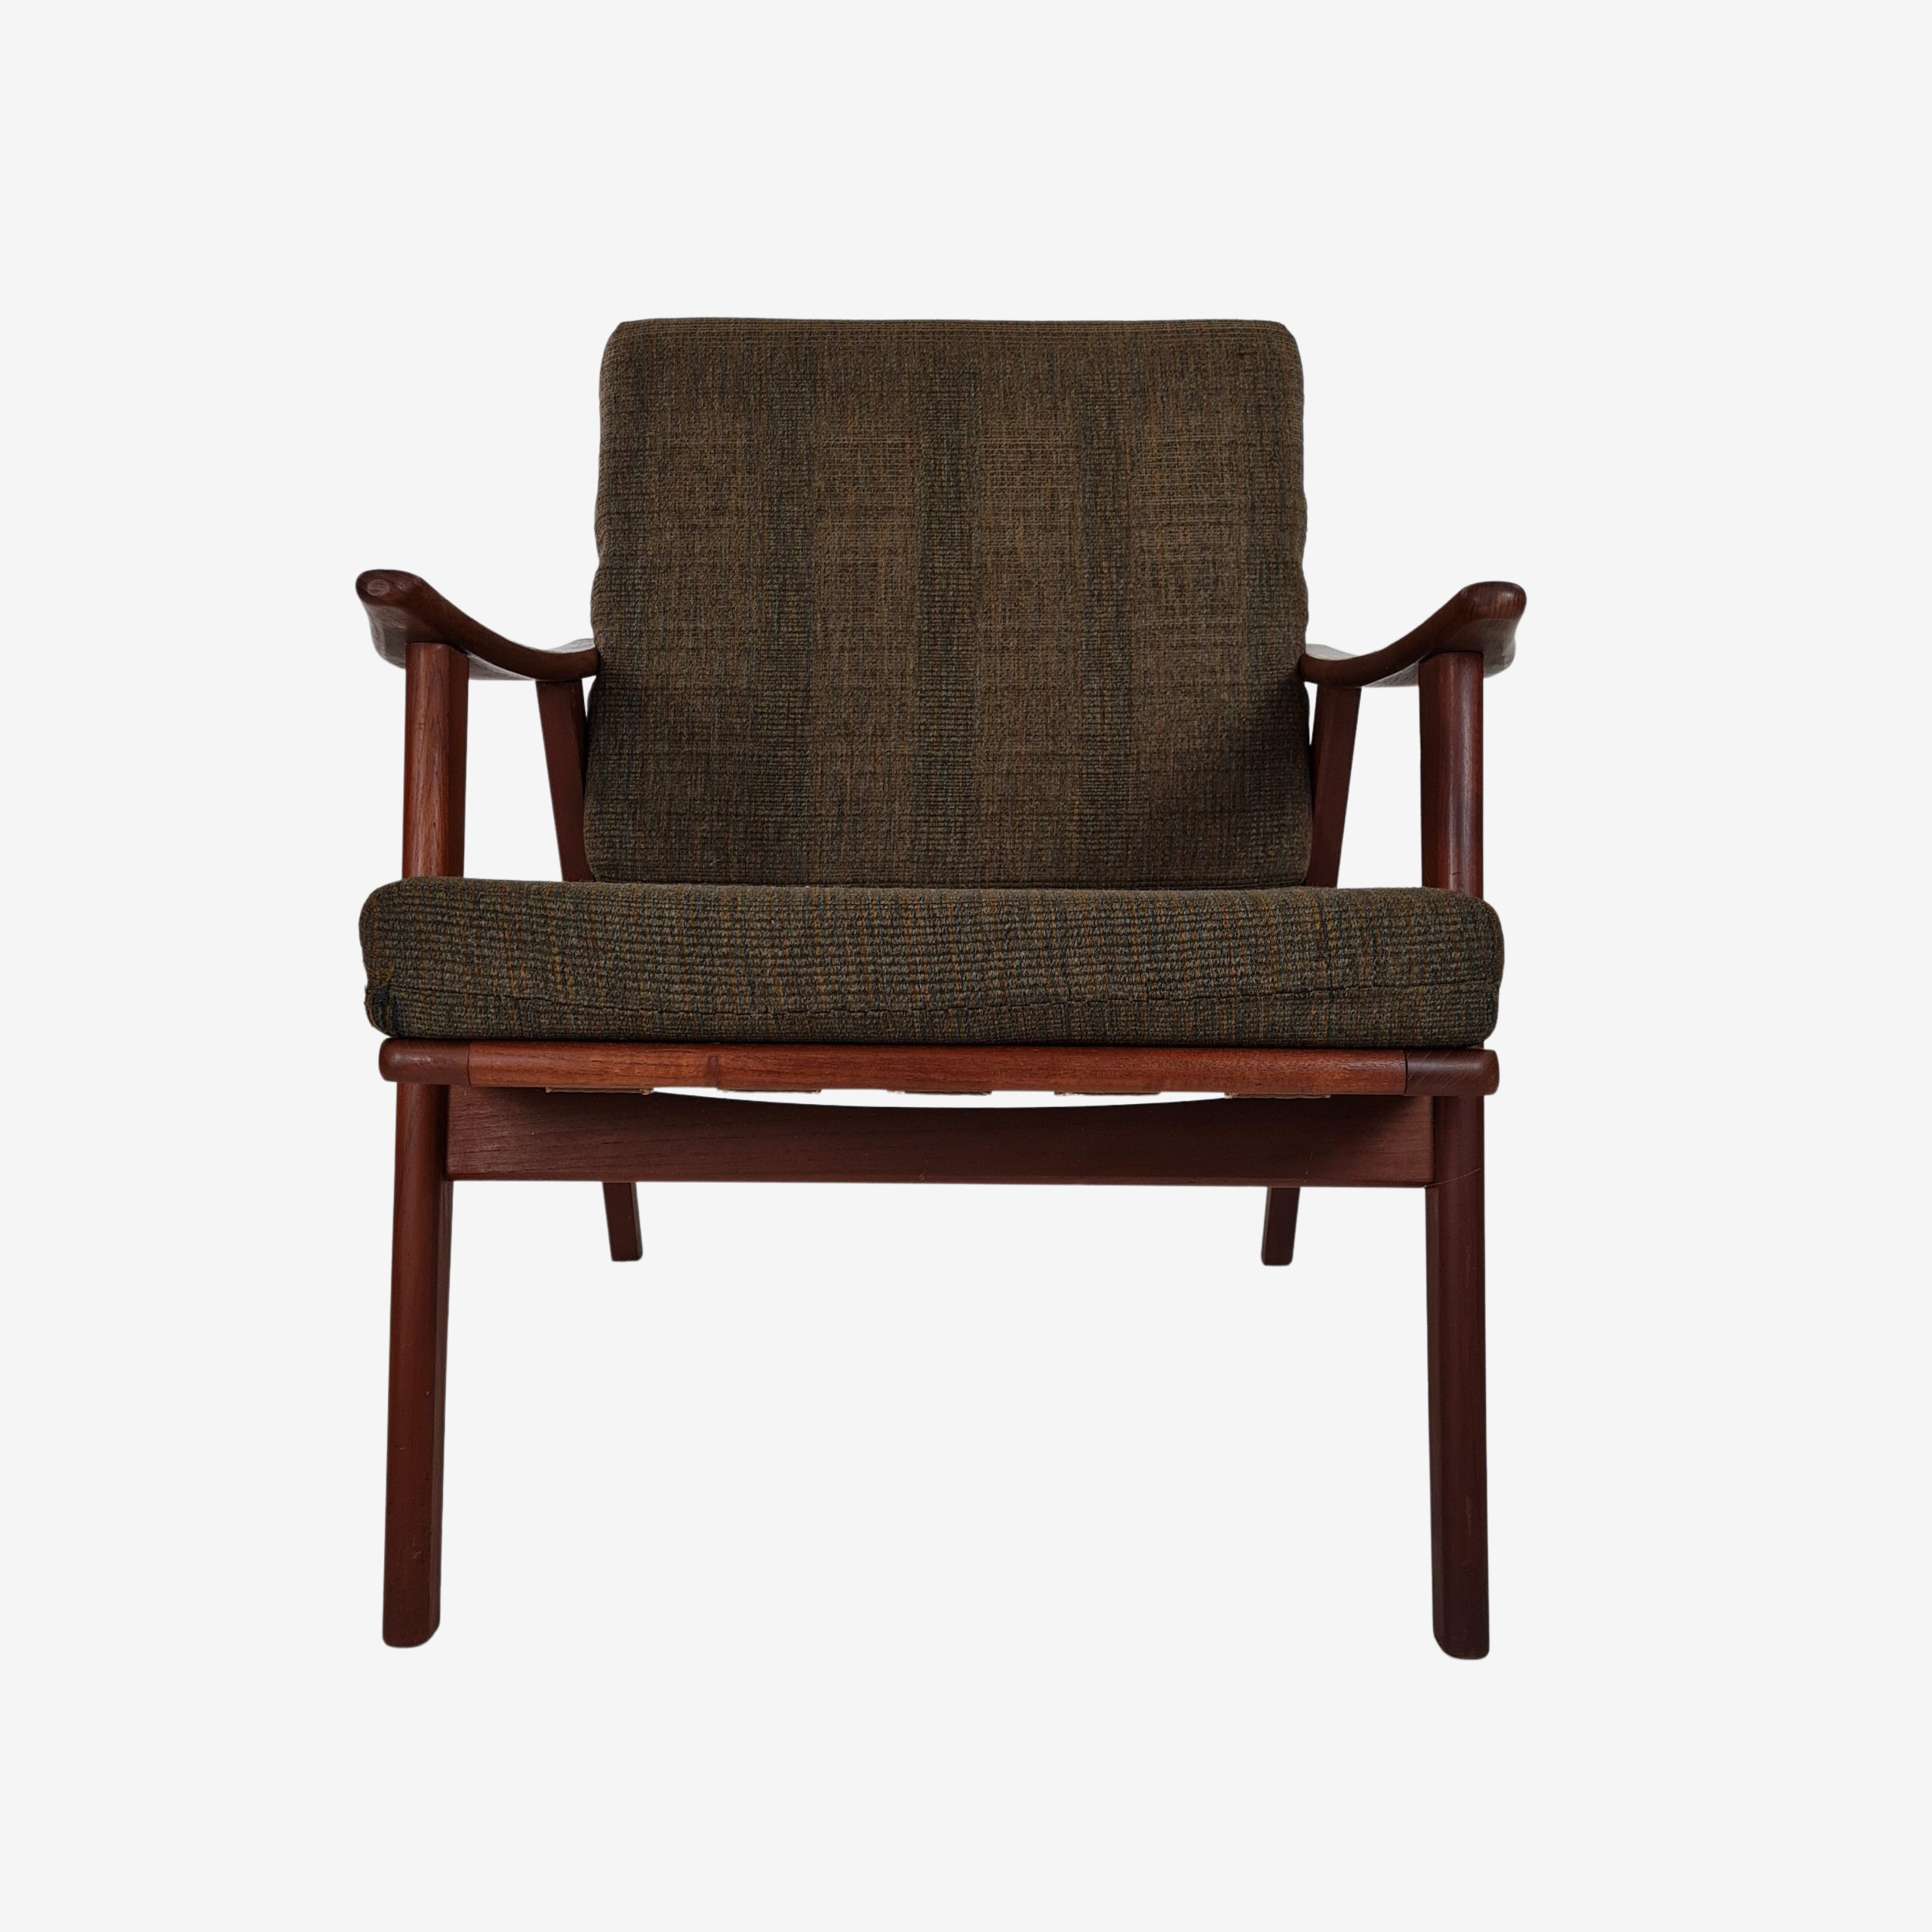 Low-back armchair with curved armrests | Danish design | Teak